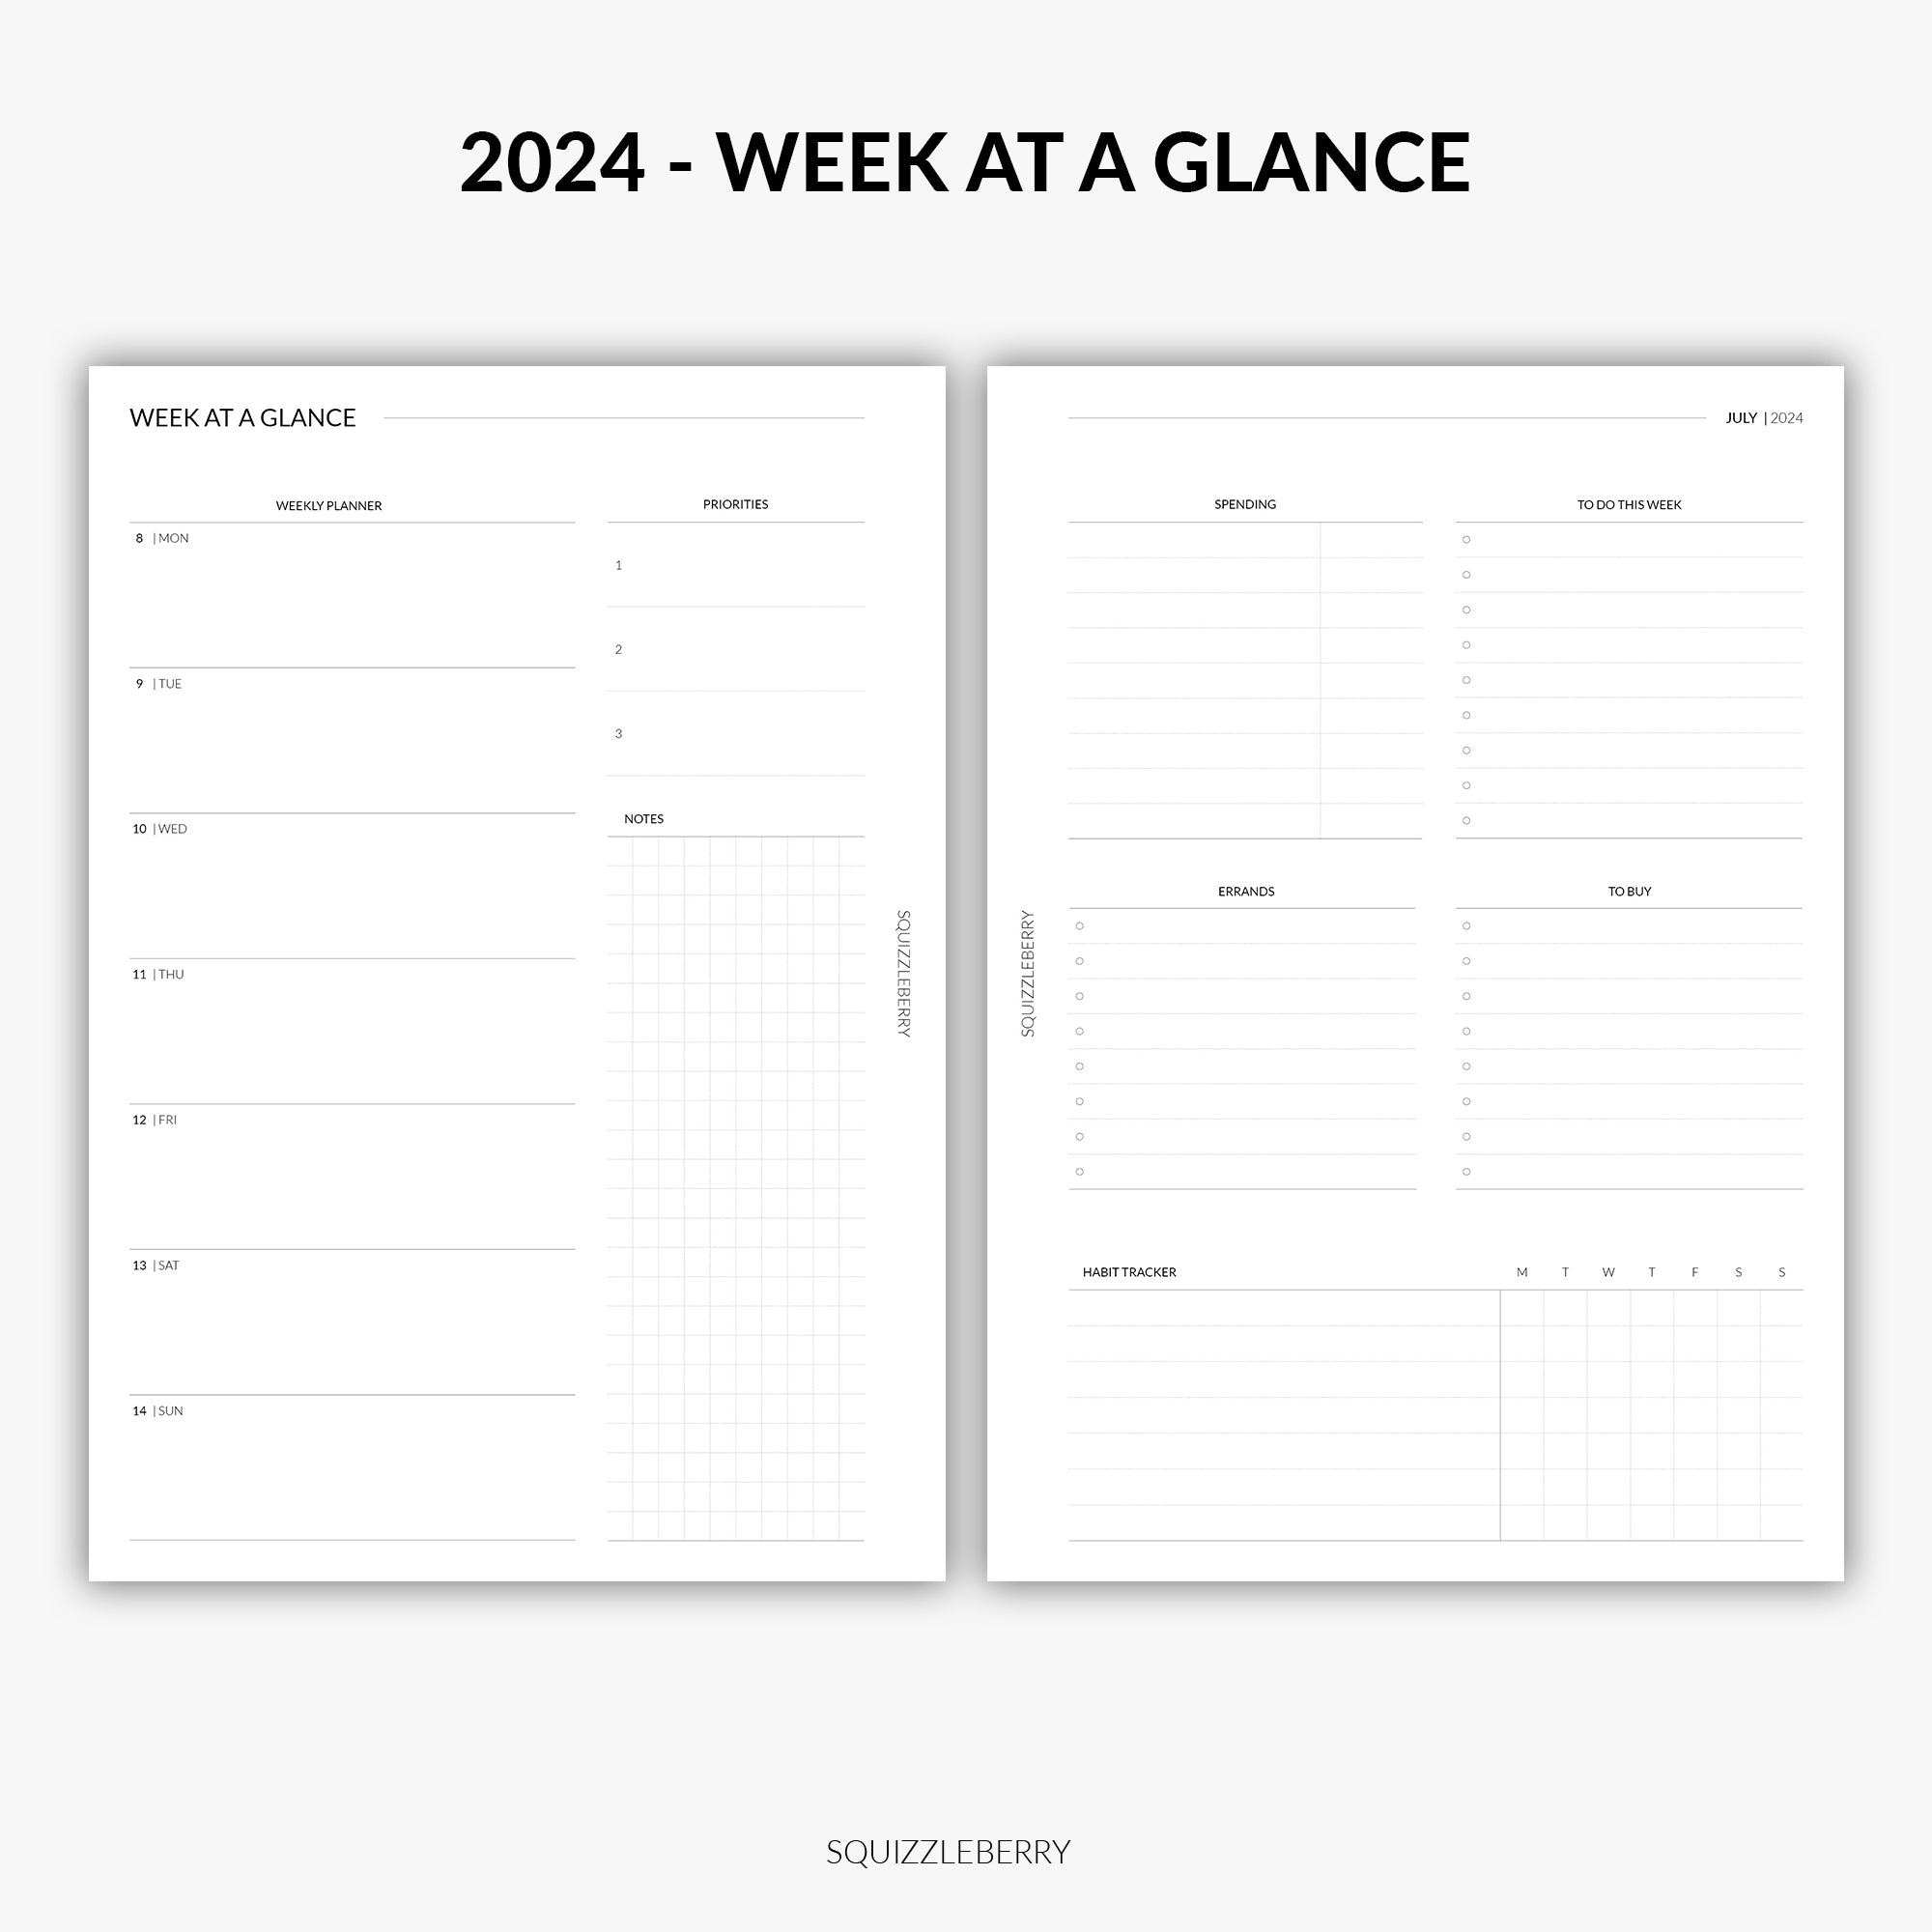 2024 - Week at a Glance